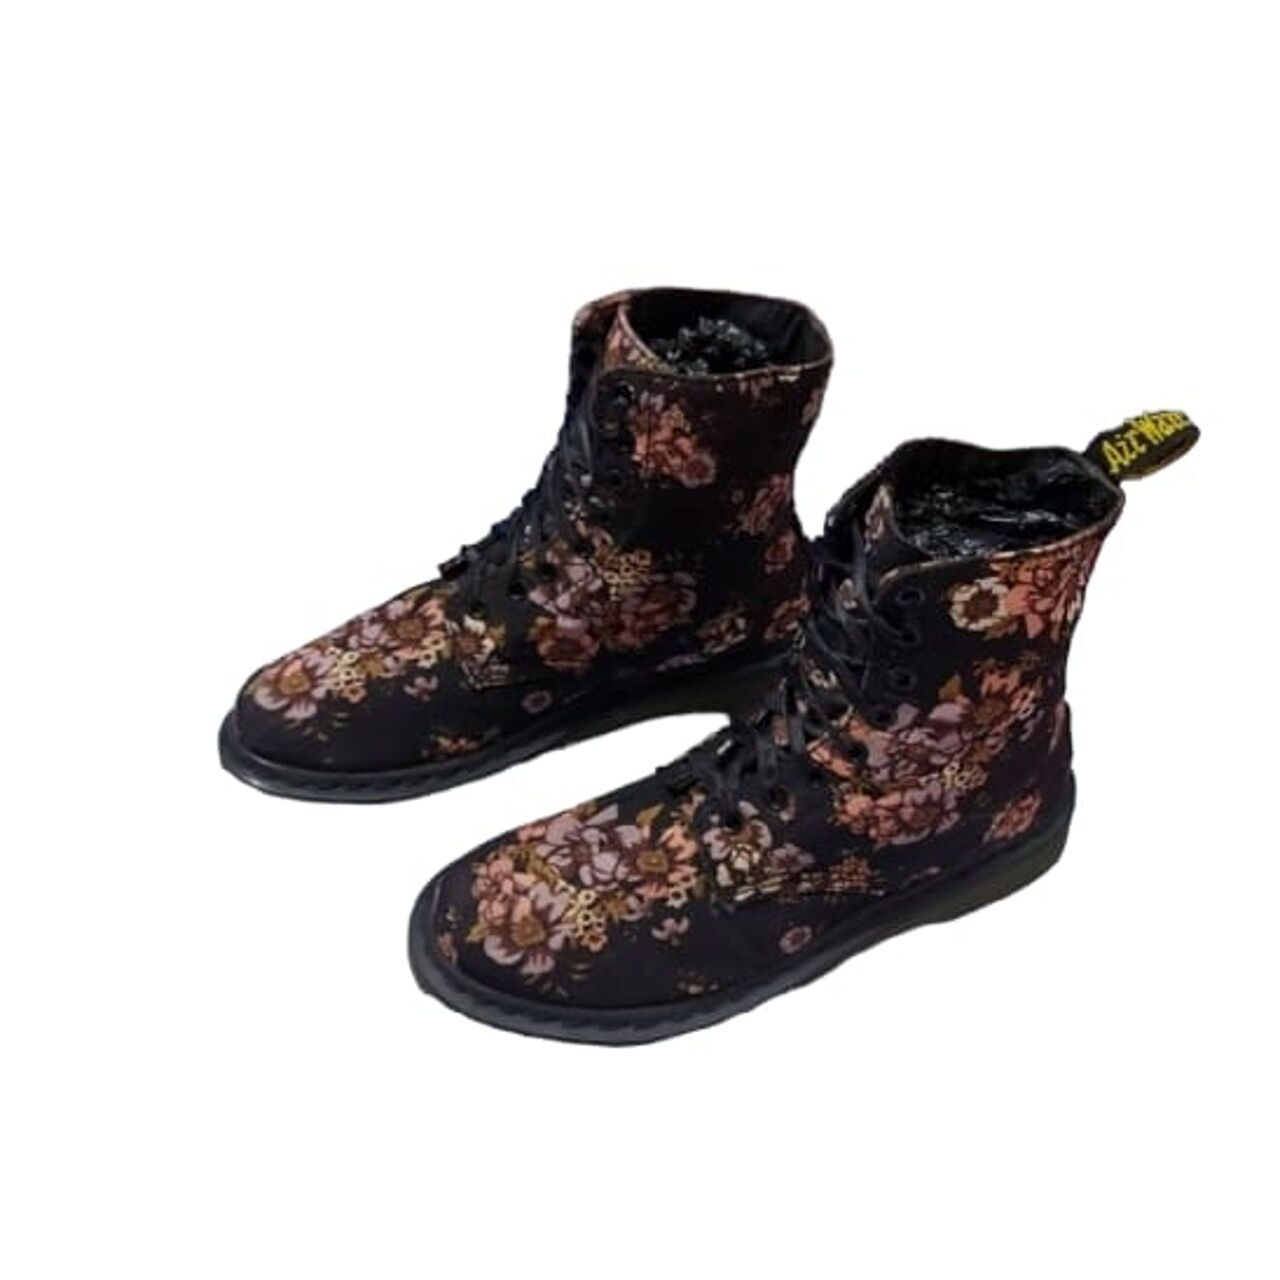 Drmartens Victorian Flower Vintage Boots